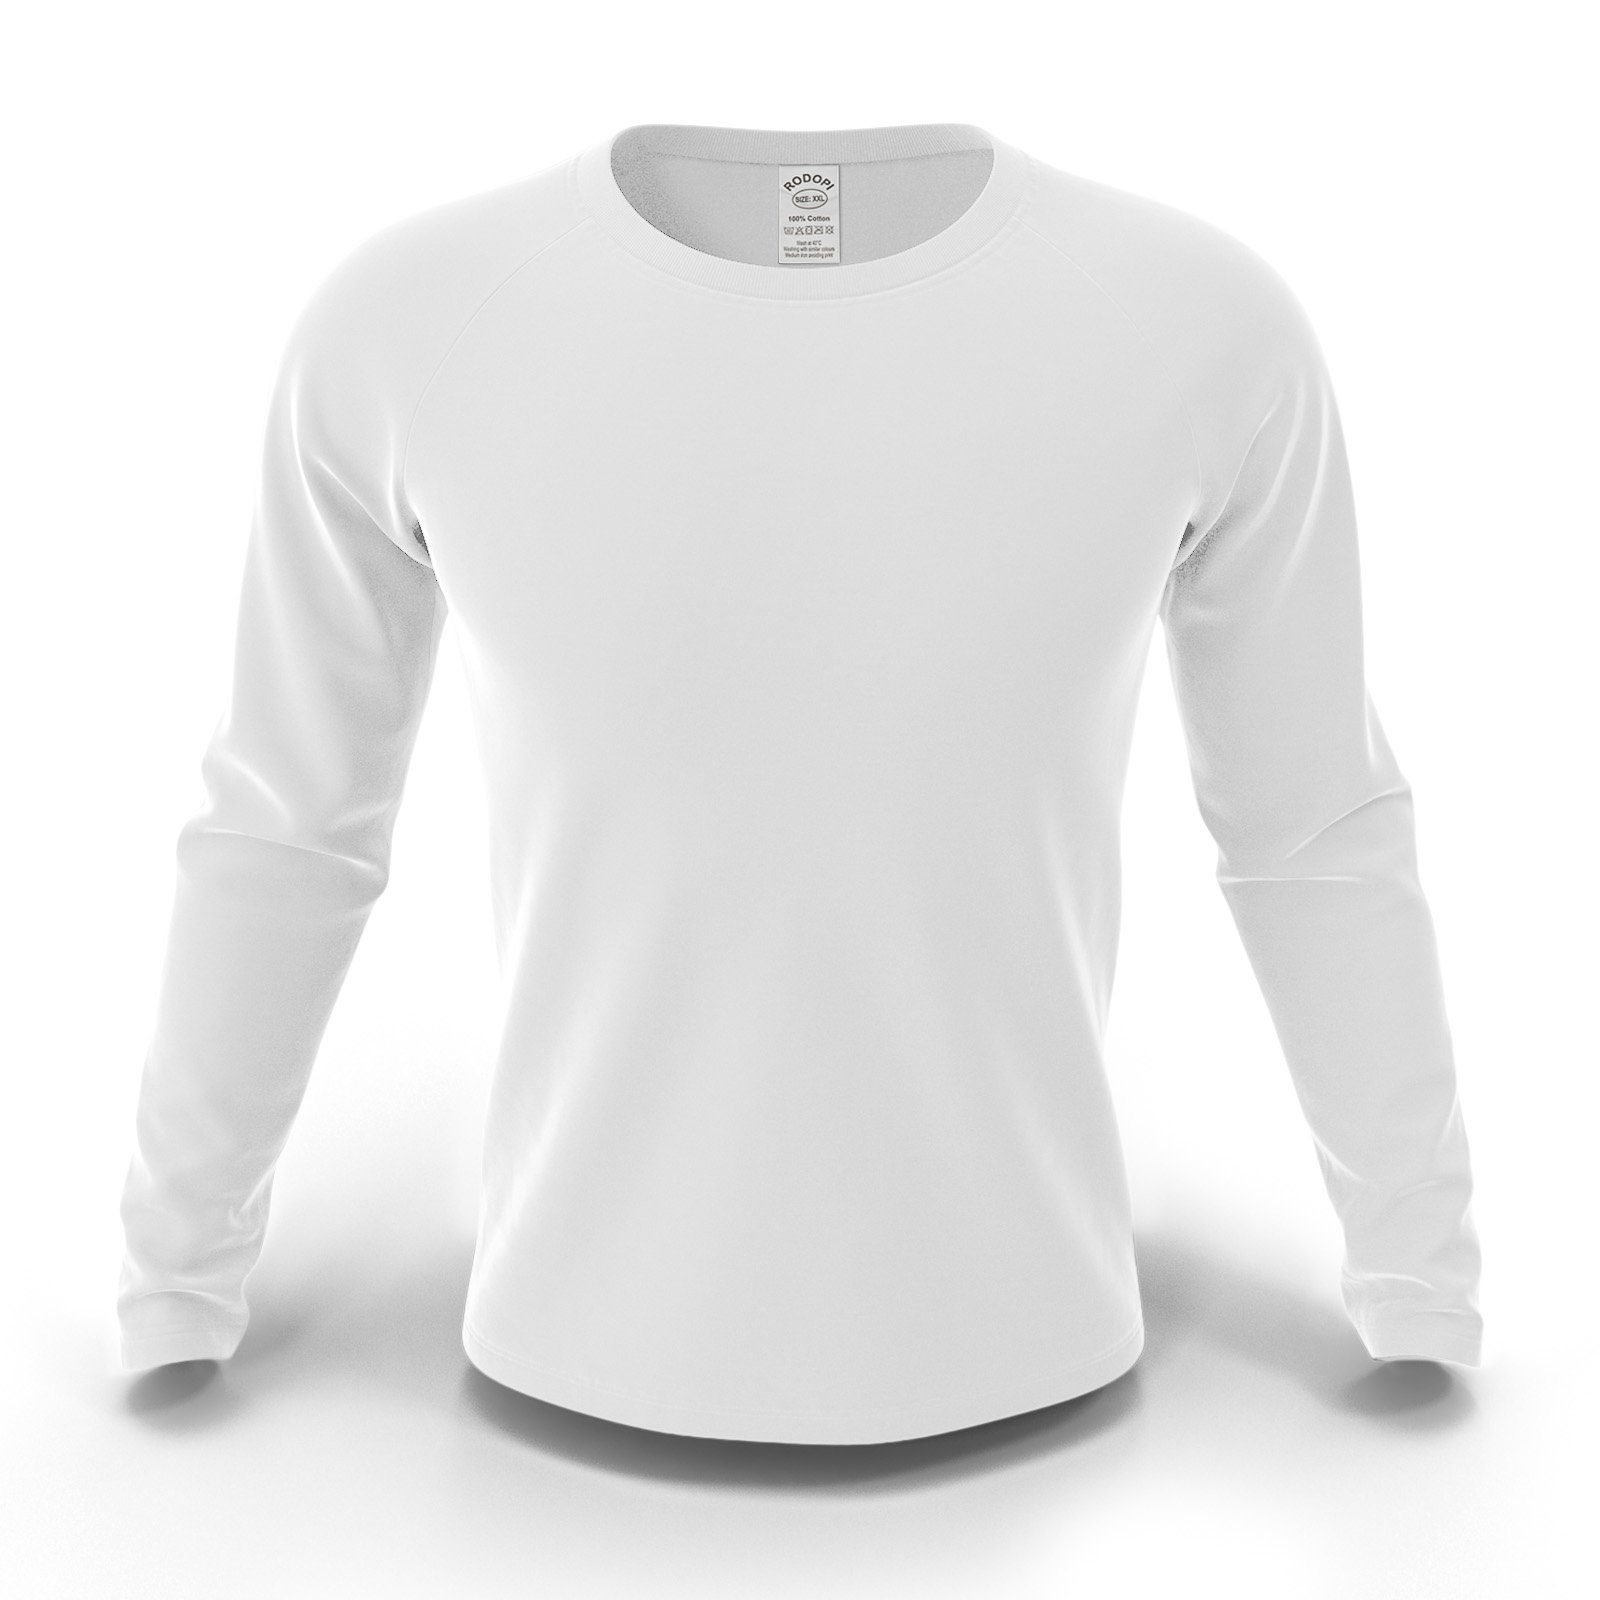 FSH Longsleeve Longsleeve Langarmshirt T-Shirt Langarm Unisex Baumwolle S-3XL weiß - 5 Stk.